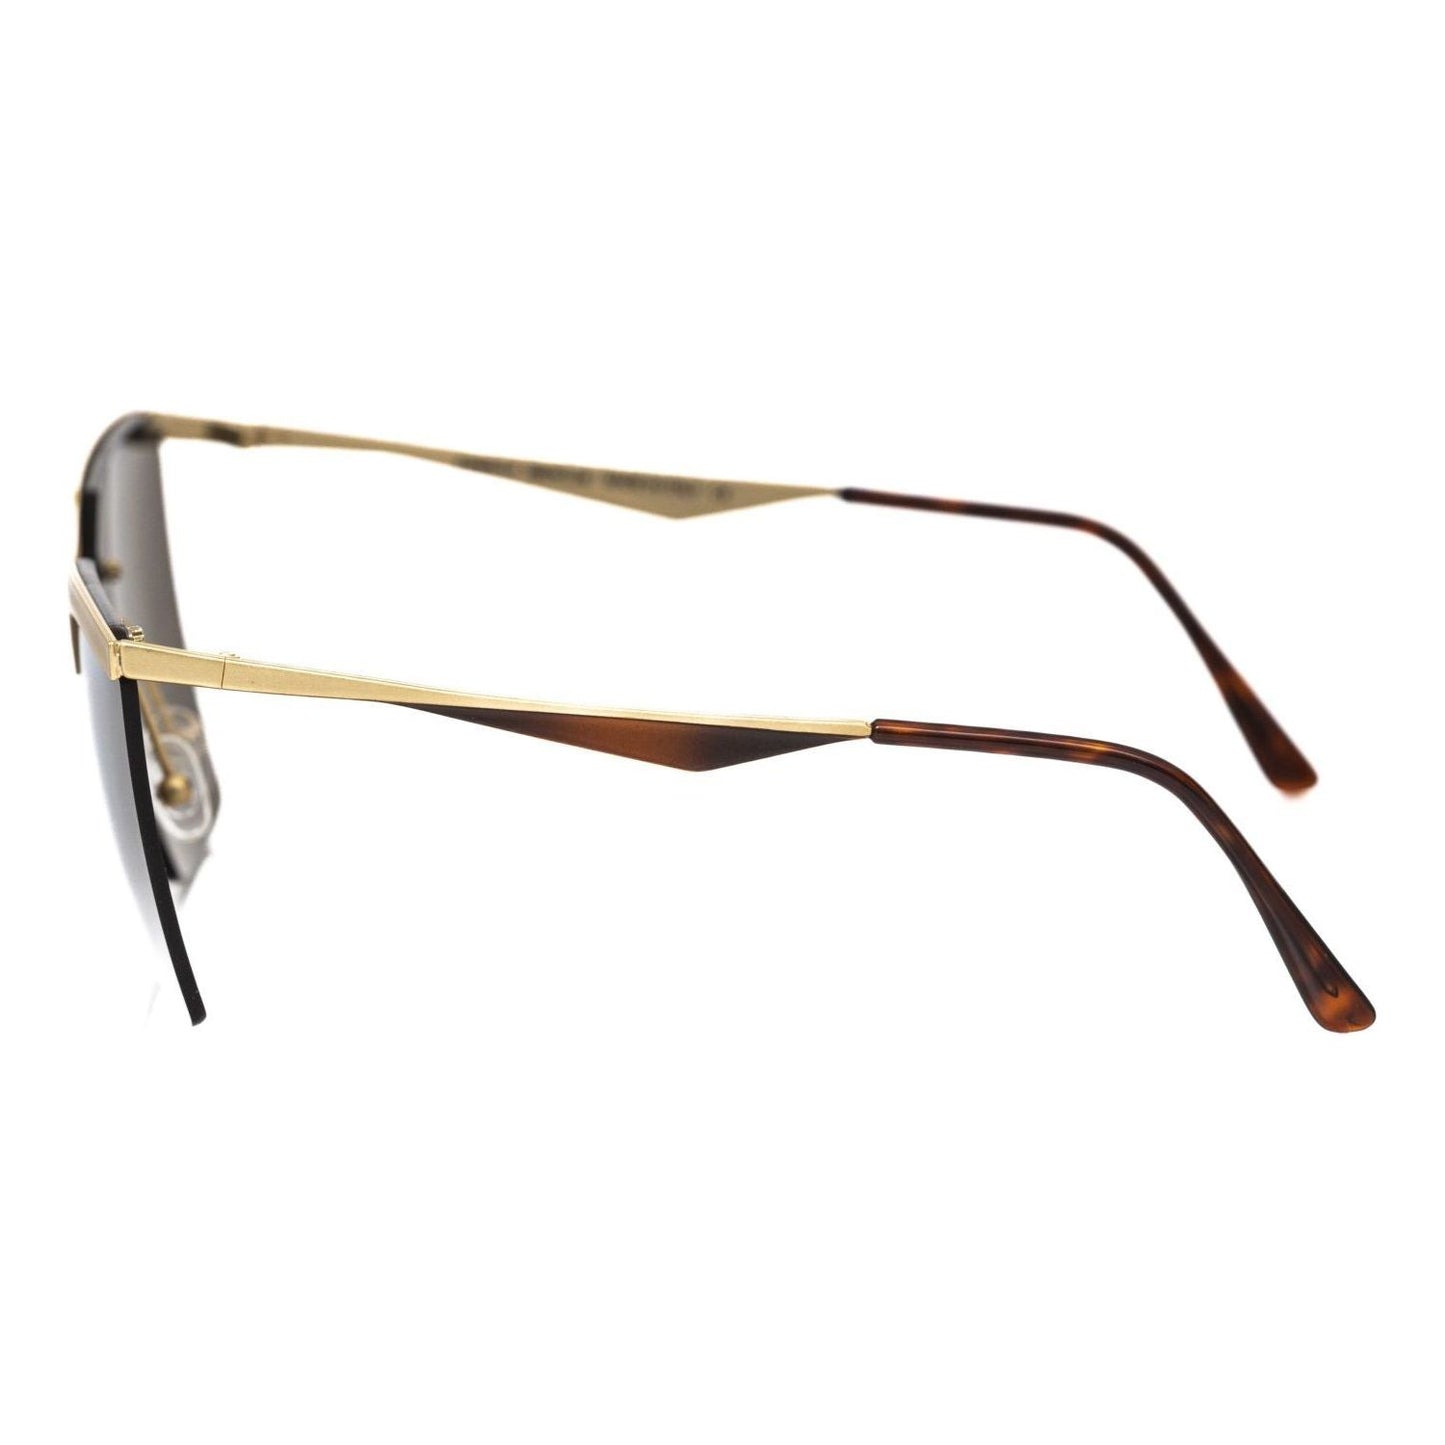 Frankie Morello Chic Gold-Toned Clubmaster Sunglasses gold-metallic-fibre-sunglasses-2 product-22088-1657604000-47-scaled-1c819f98-abb.jpg